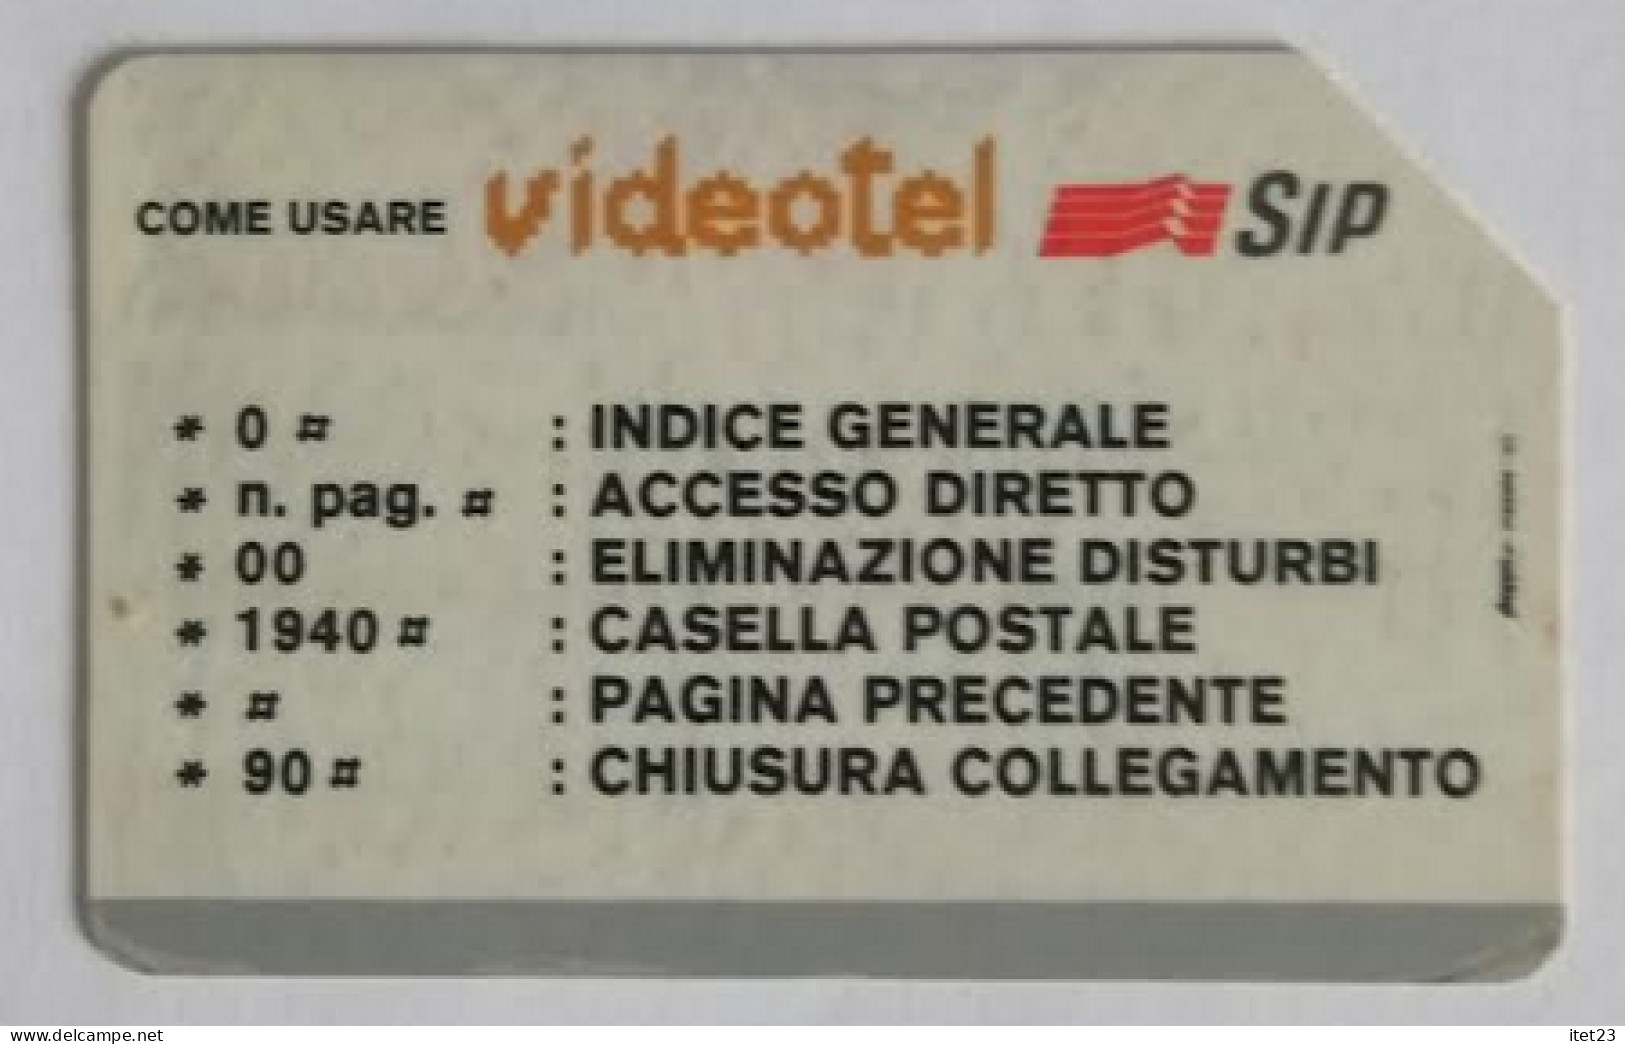 SCHEDA TELEFONICA ITALIANA - USI SPECIALI  VIDEOTEL SIP- C&C 4009 - [4] Collections